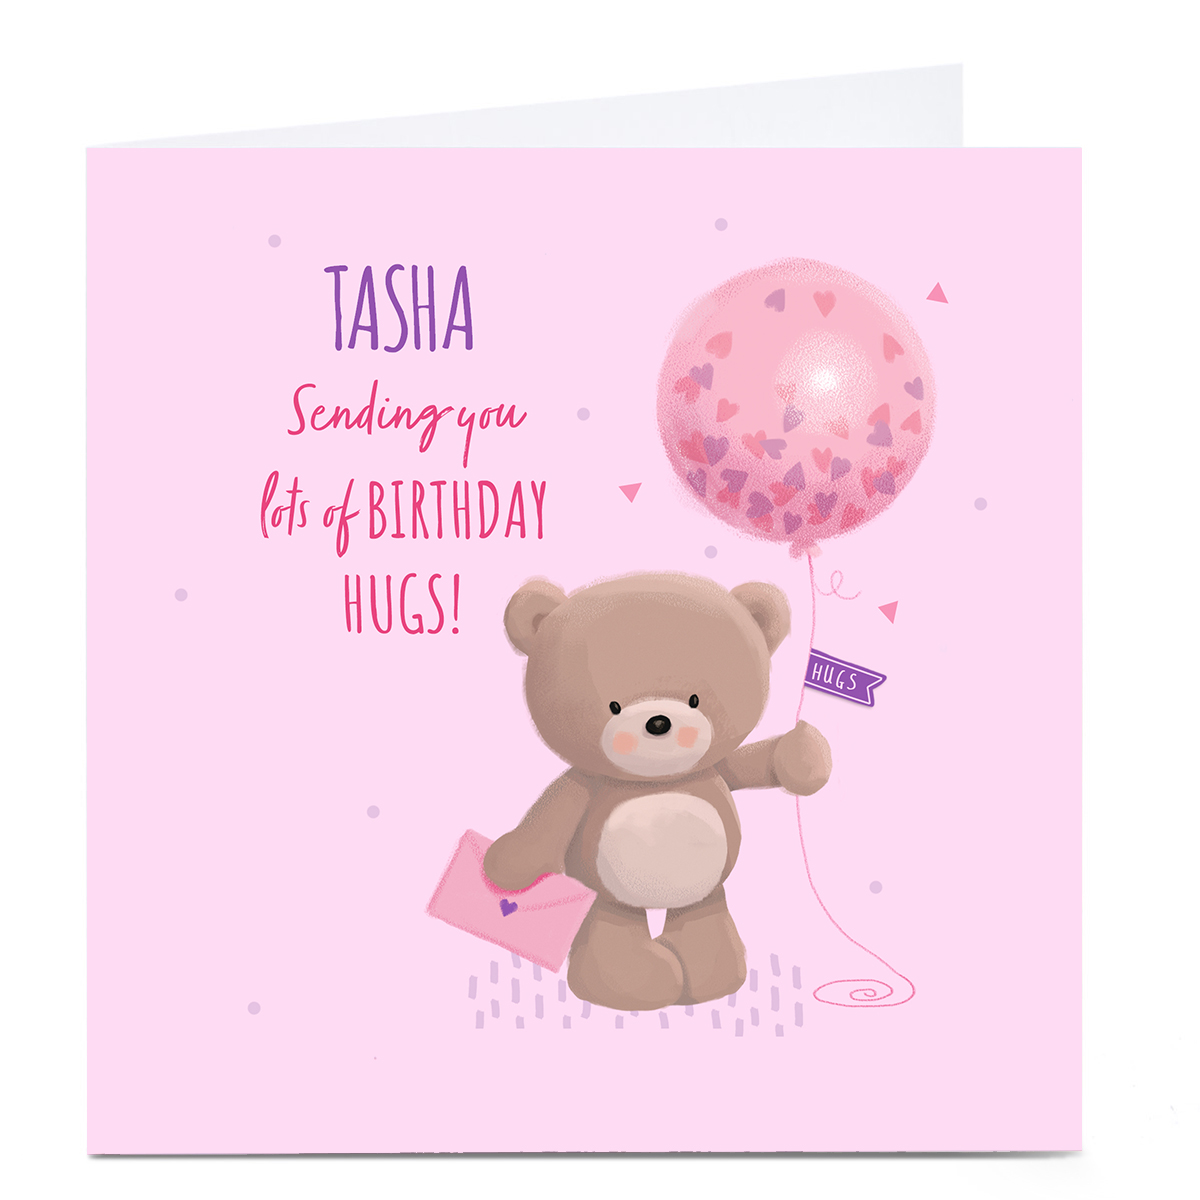 Personalised Charity Hugs Bear Birthday Card - Lots Of Birthday Hugs